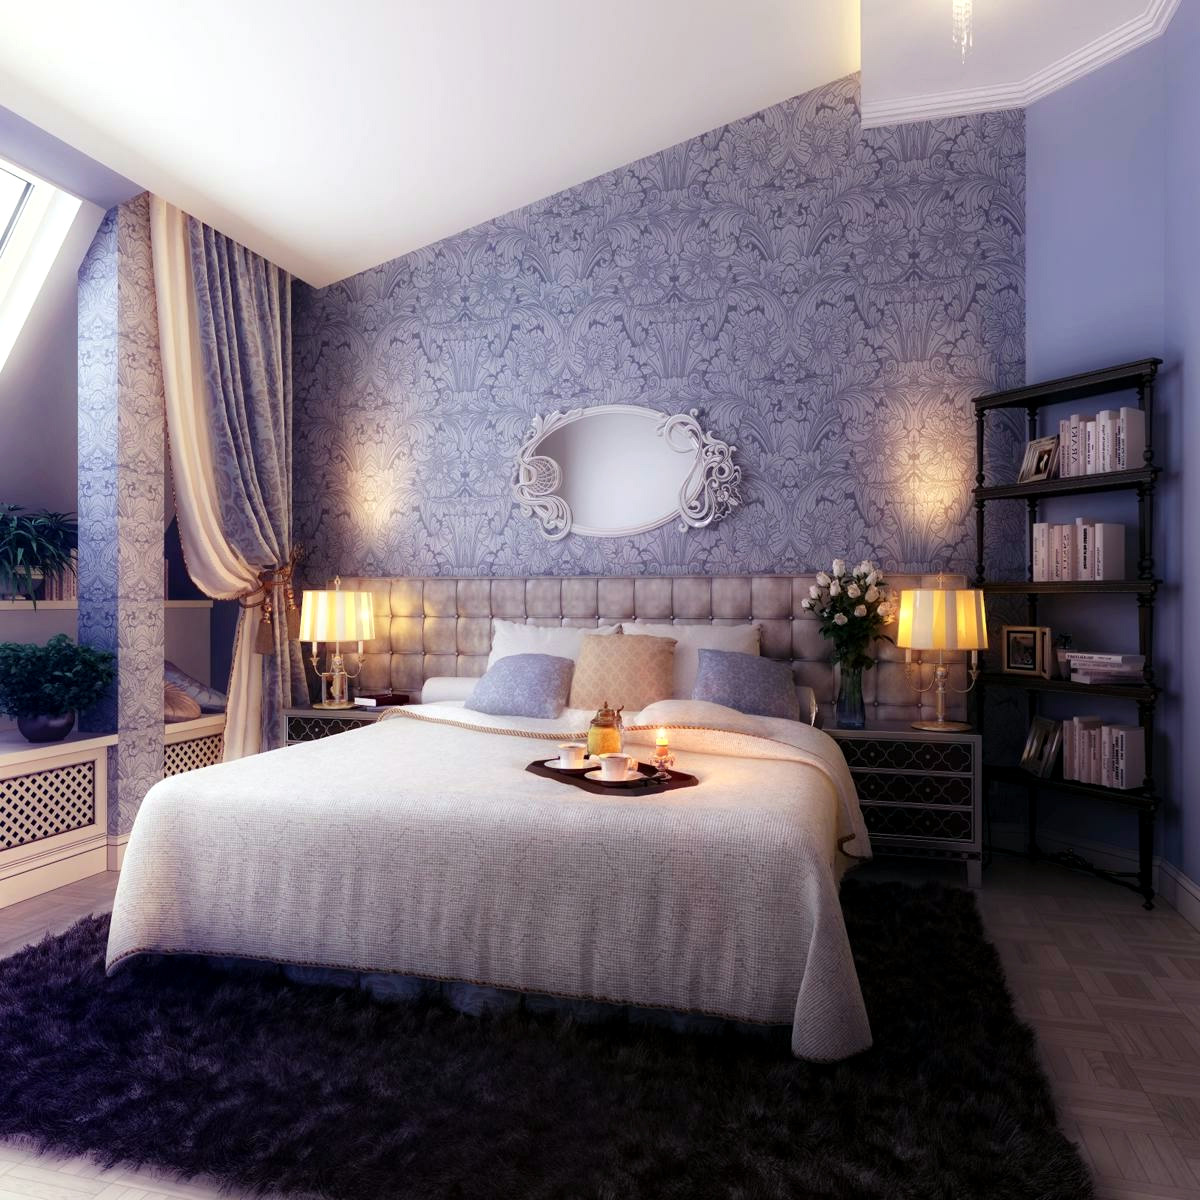 Bedroom Design Art: A Touch Of Elegance